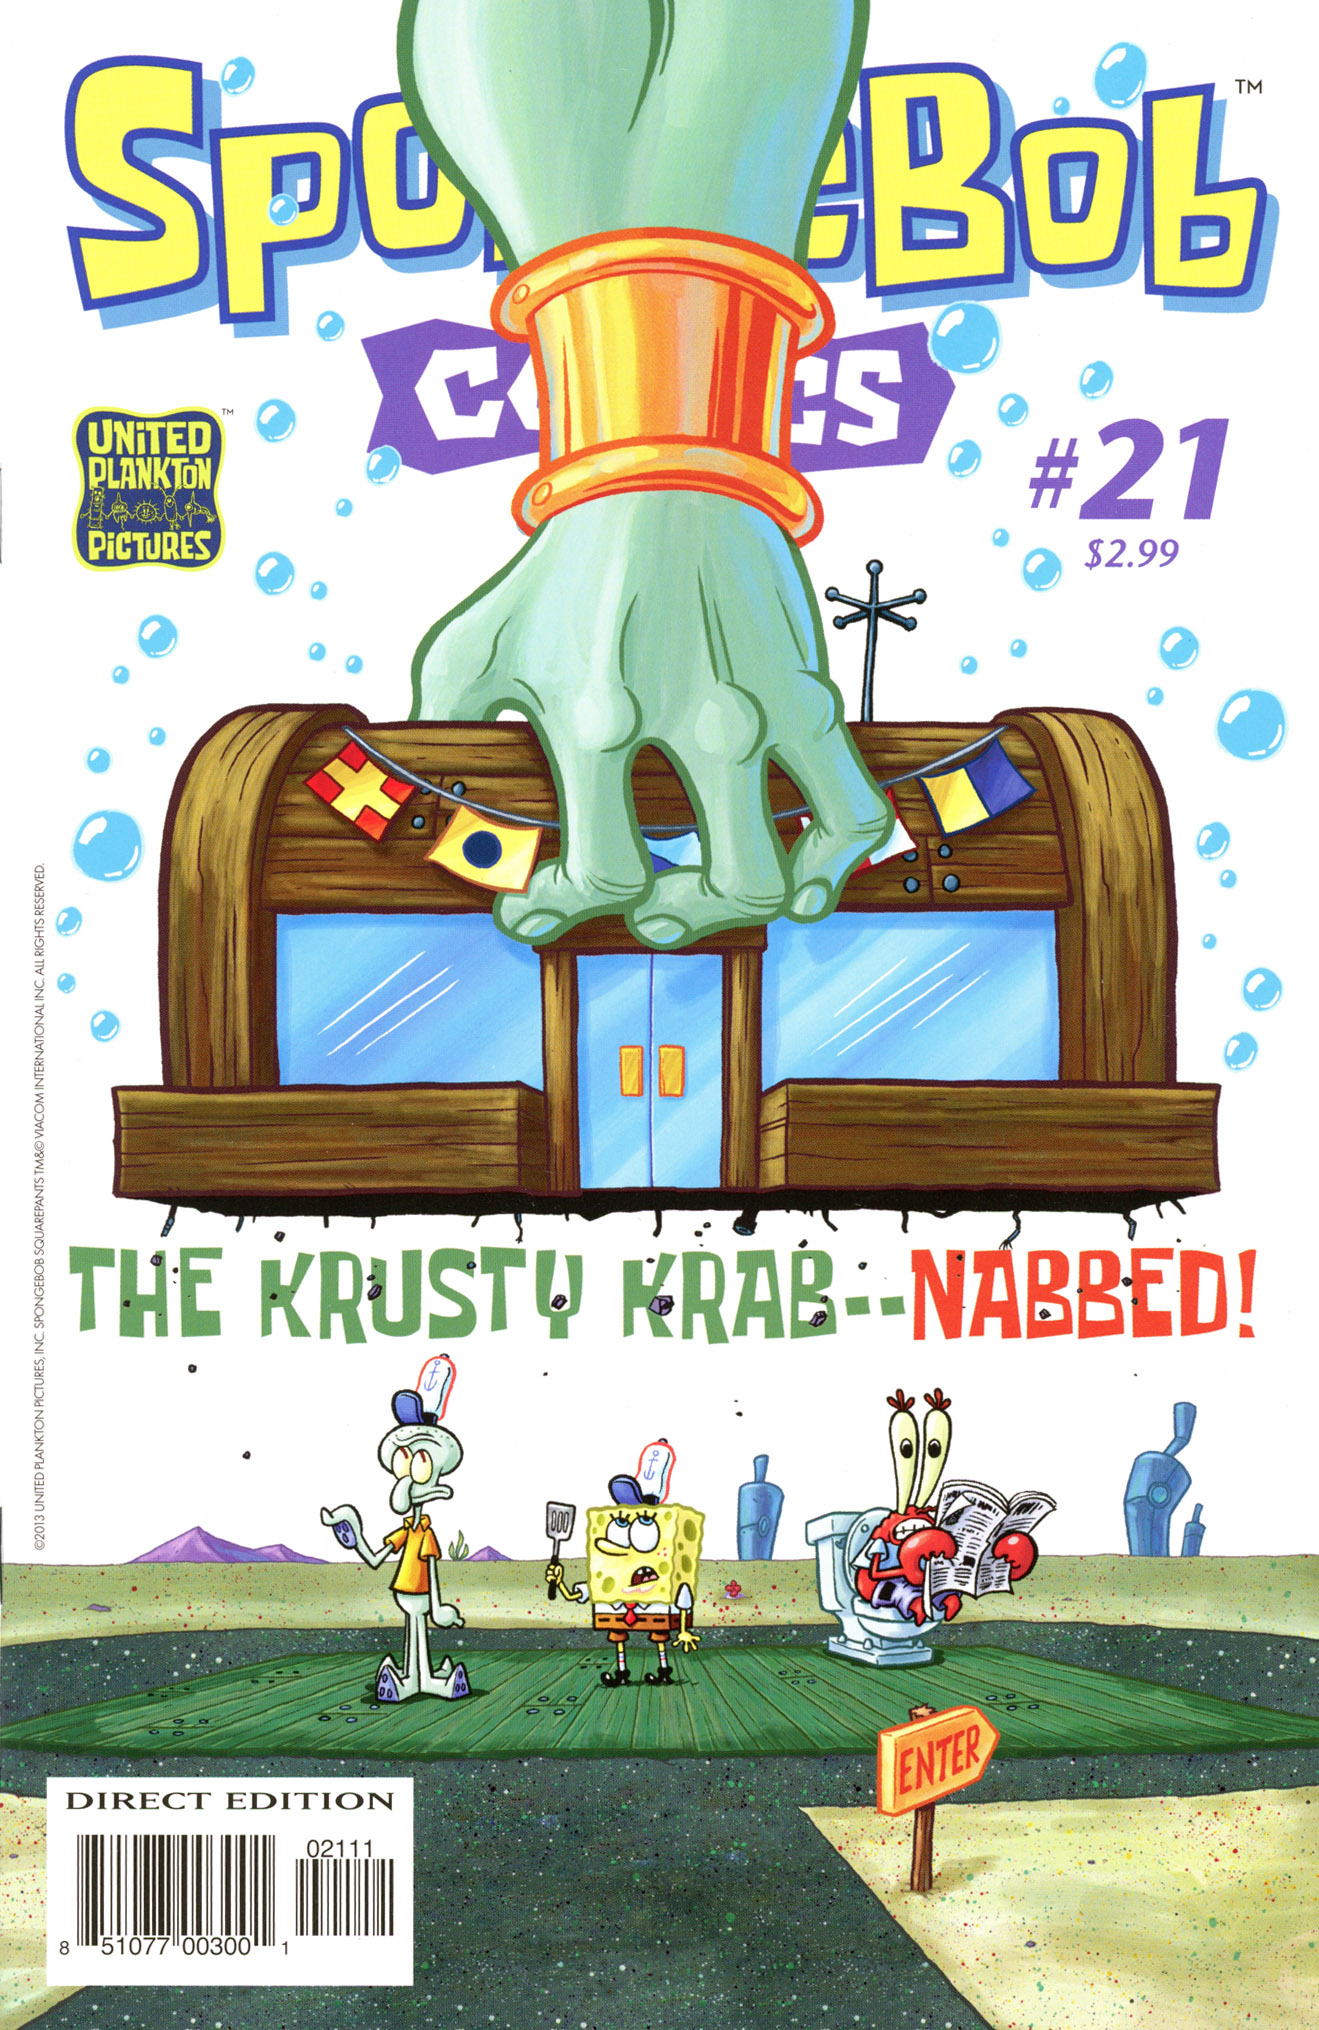 The Krusty Krab--Nabbed!